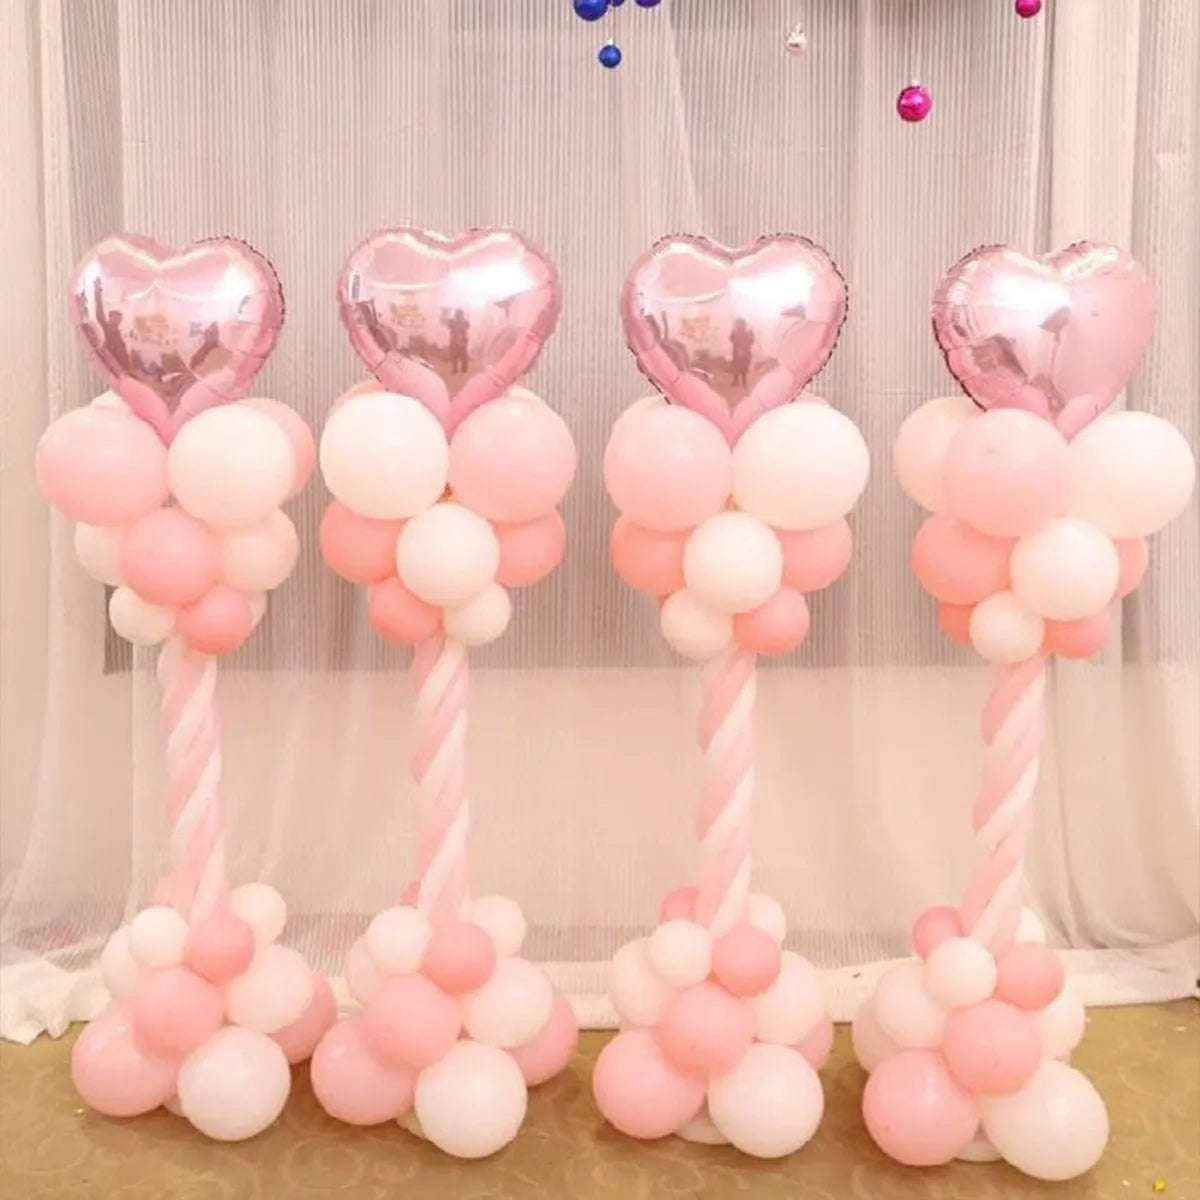 1/2set Adjustable Balloon Column Stand Metal Balloon Stand Holder with Plastic Base for Wedding Decor Birthday Baby Shower Party-Masscheap